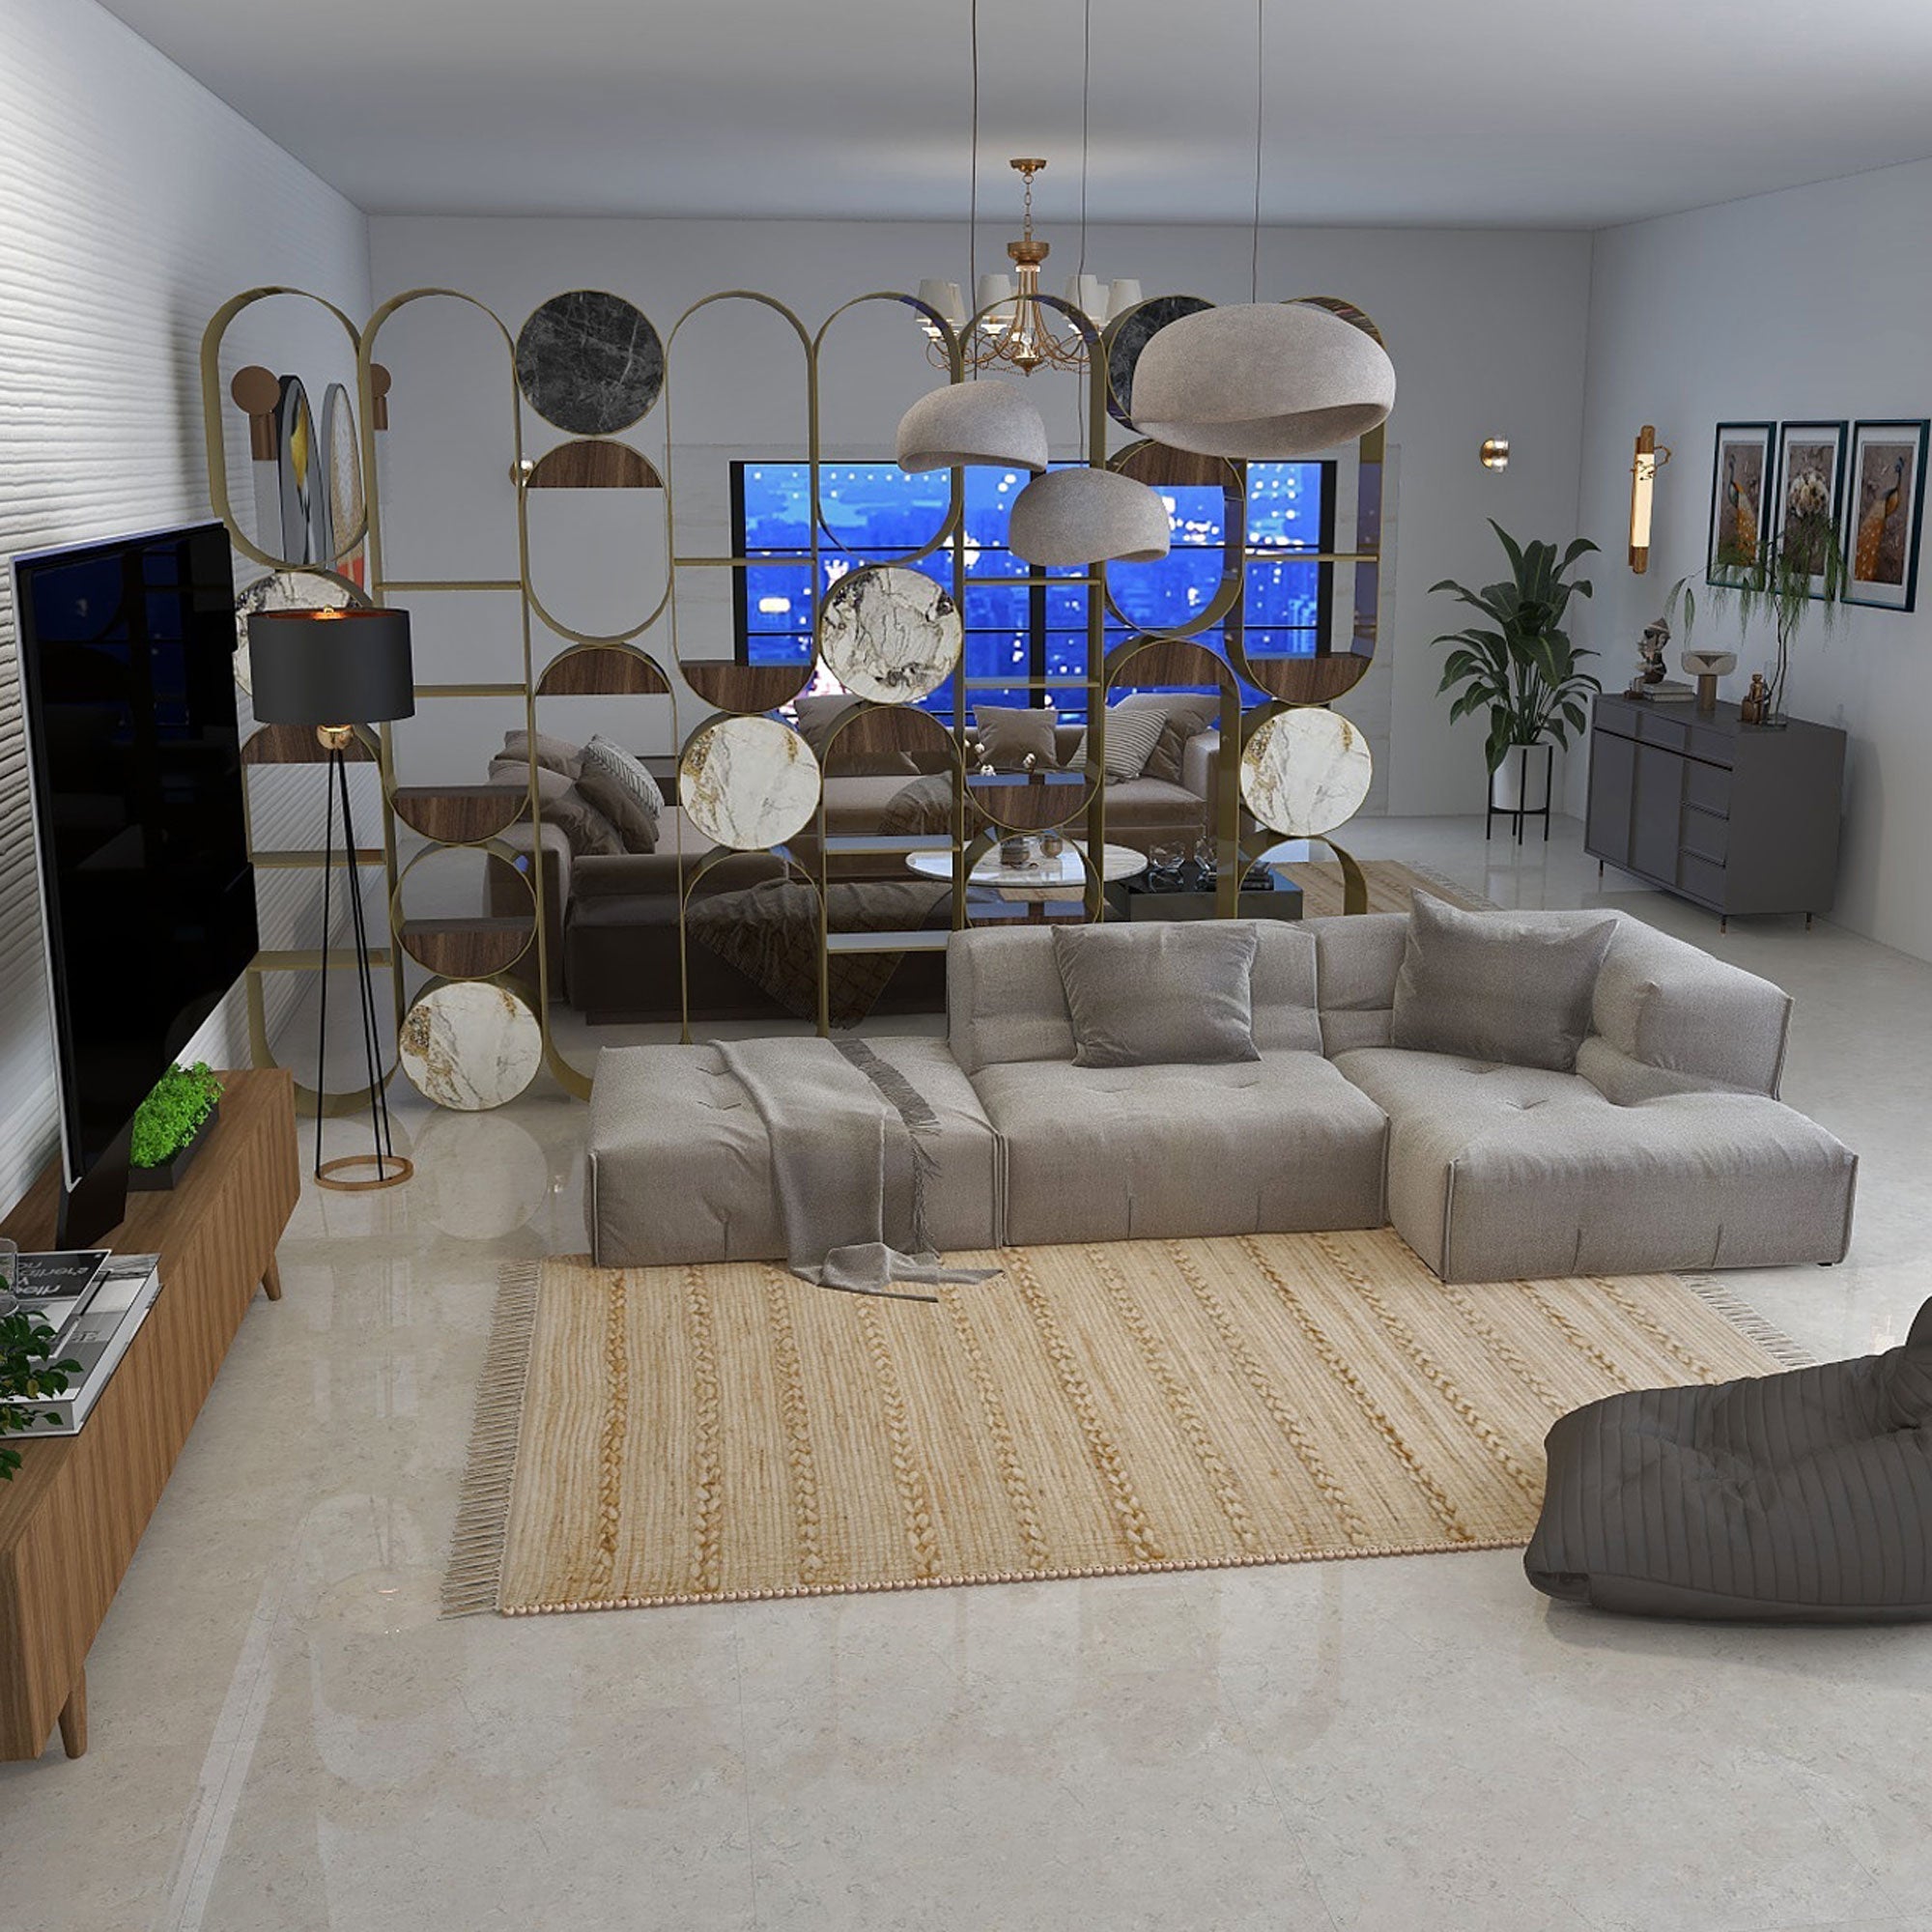 Transform Your Space: 10 Creative Carpet Ideas for Home Decor